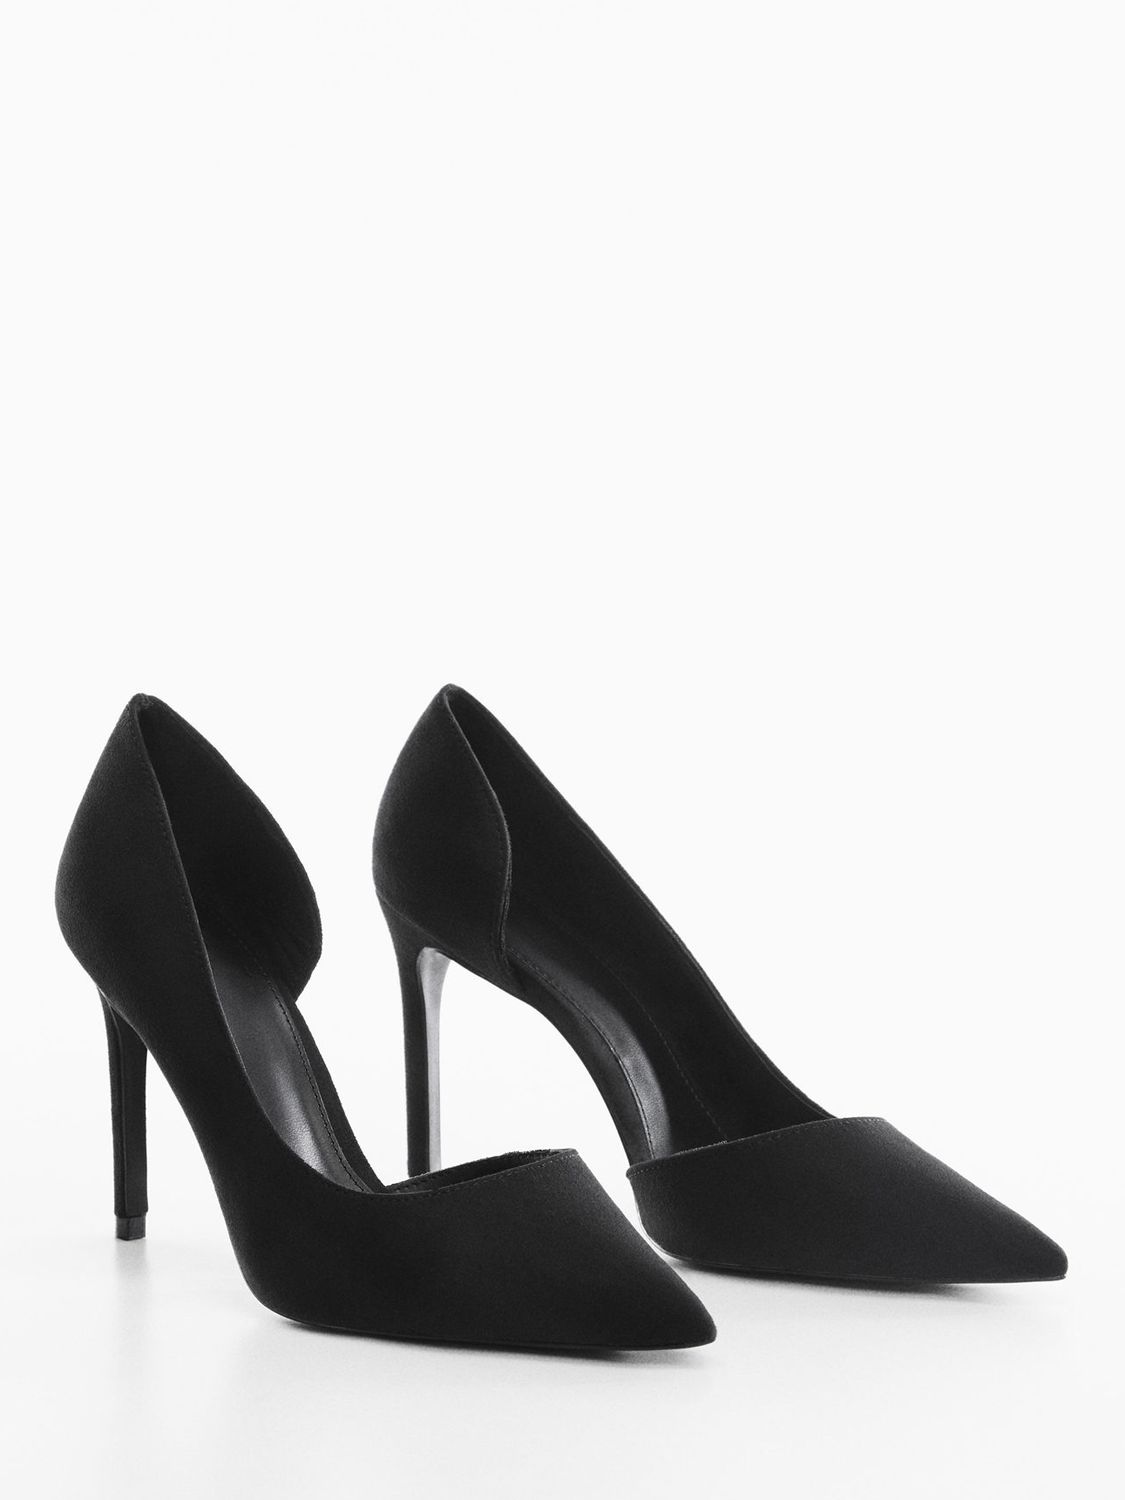 Buy Mango Audrey Pointed Toe Court Shoes, Black Online at johnlewis.com